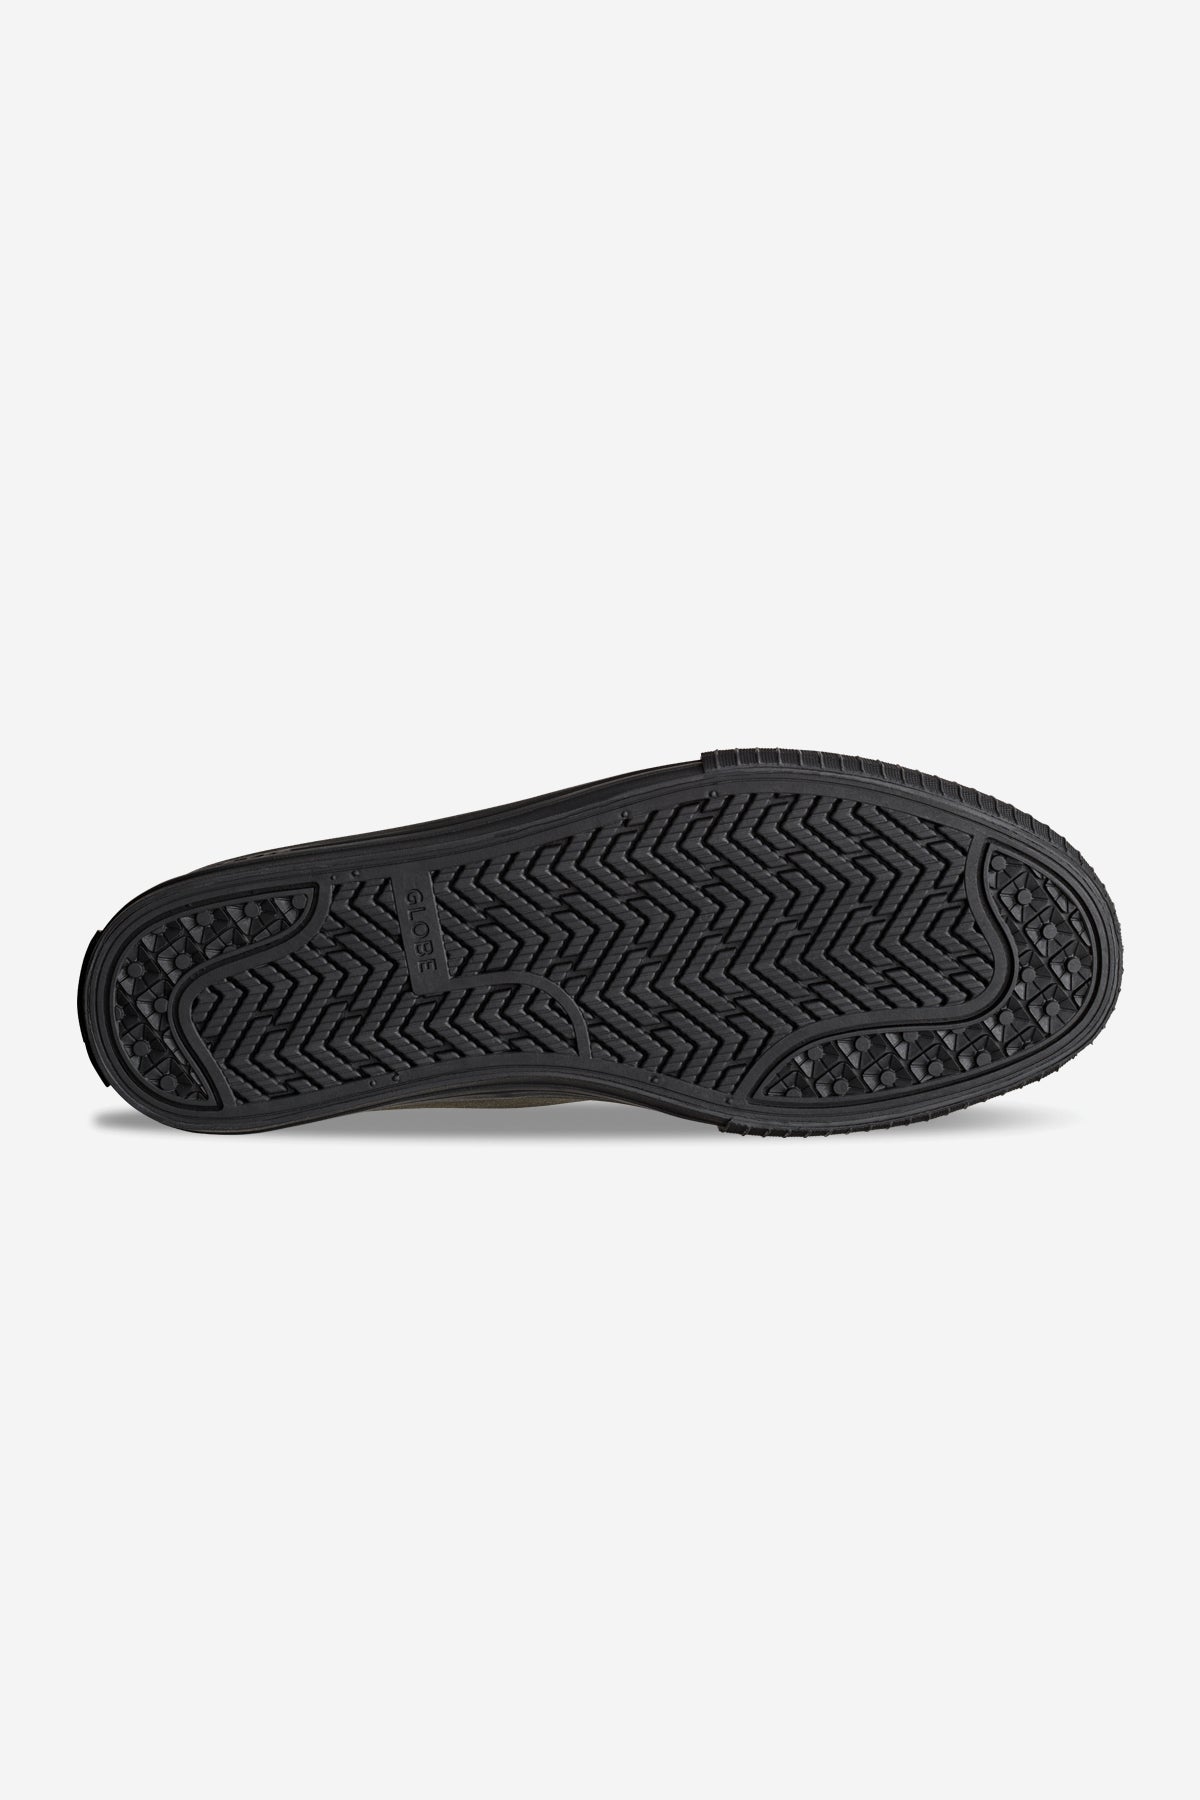 Globe - Gillette Mid - Oscuro Olive/Negro - skateboard Zapatos